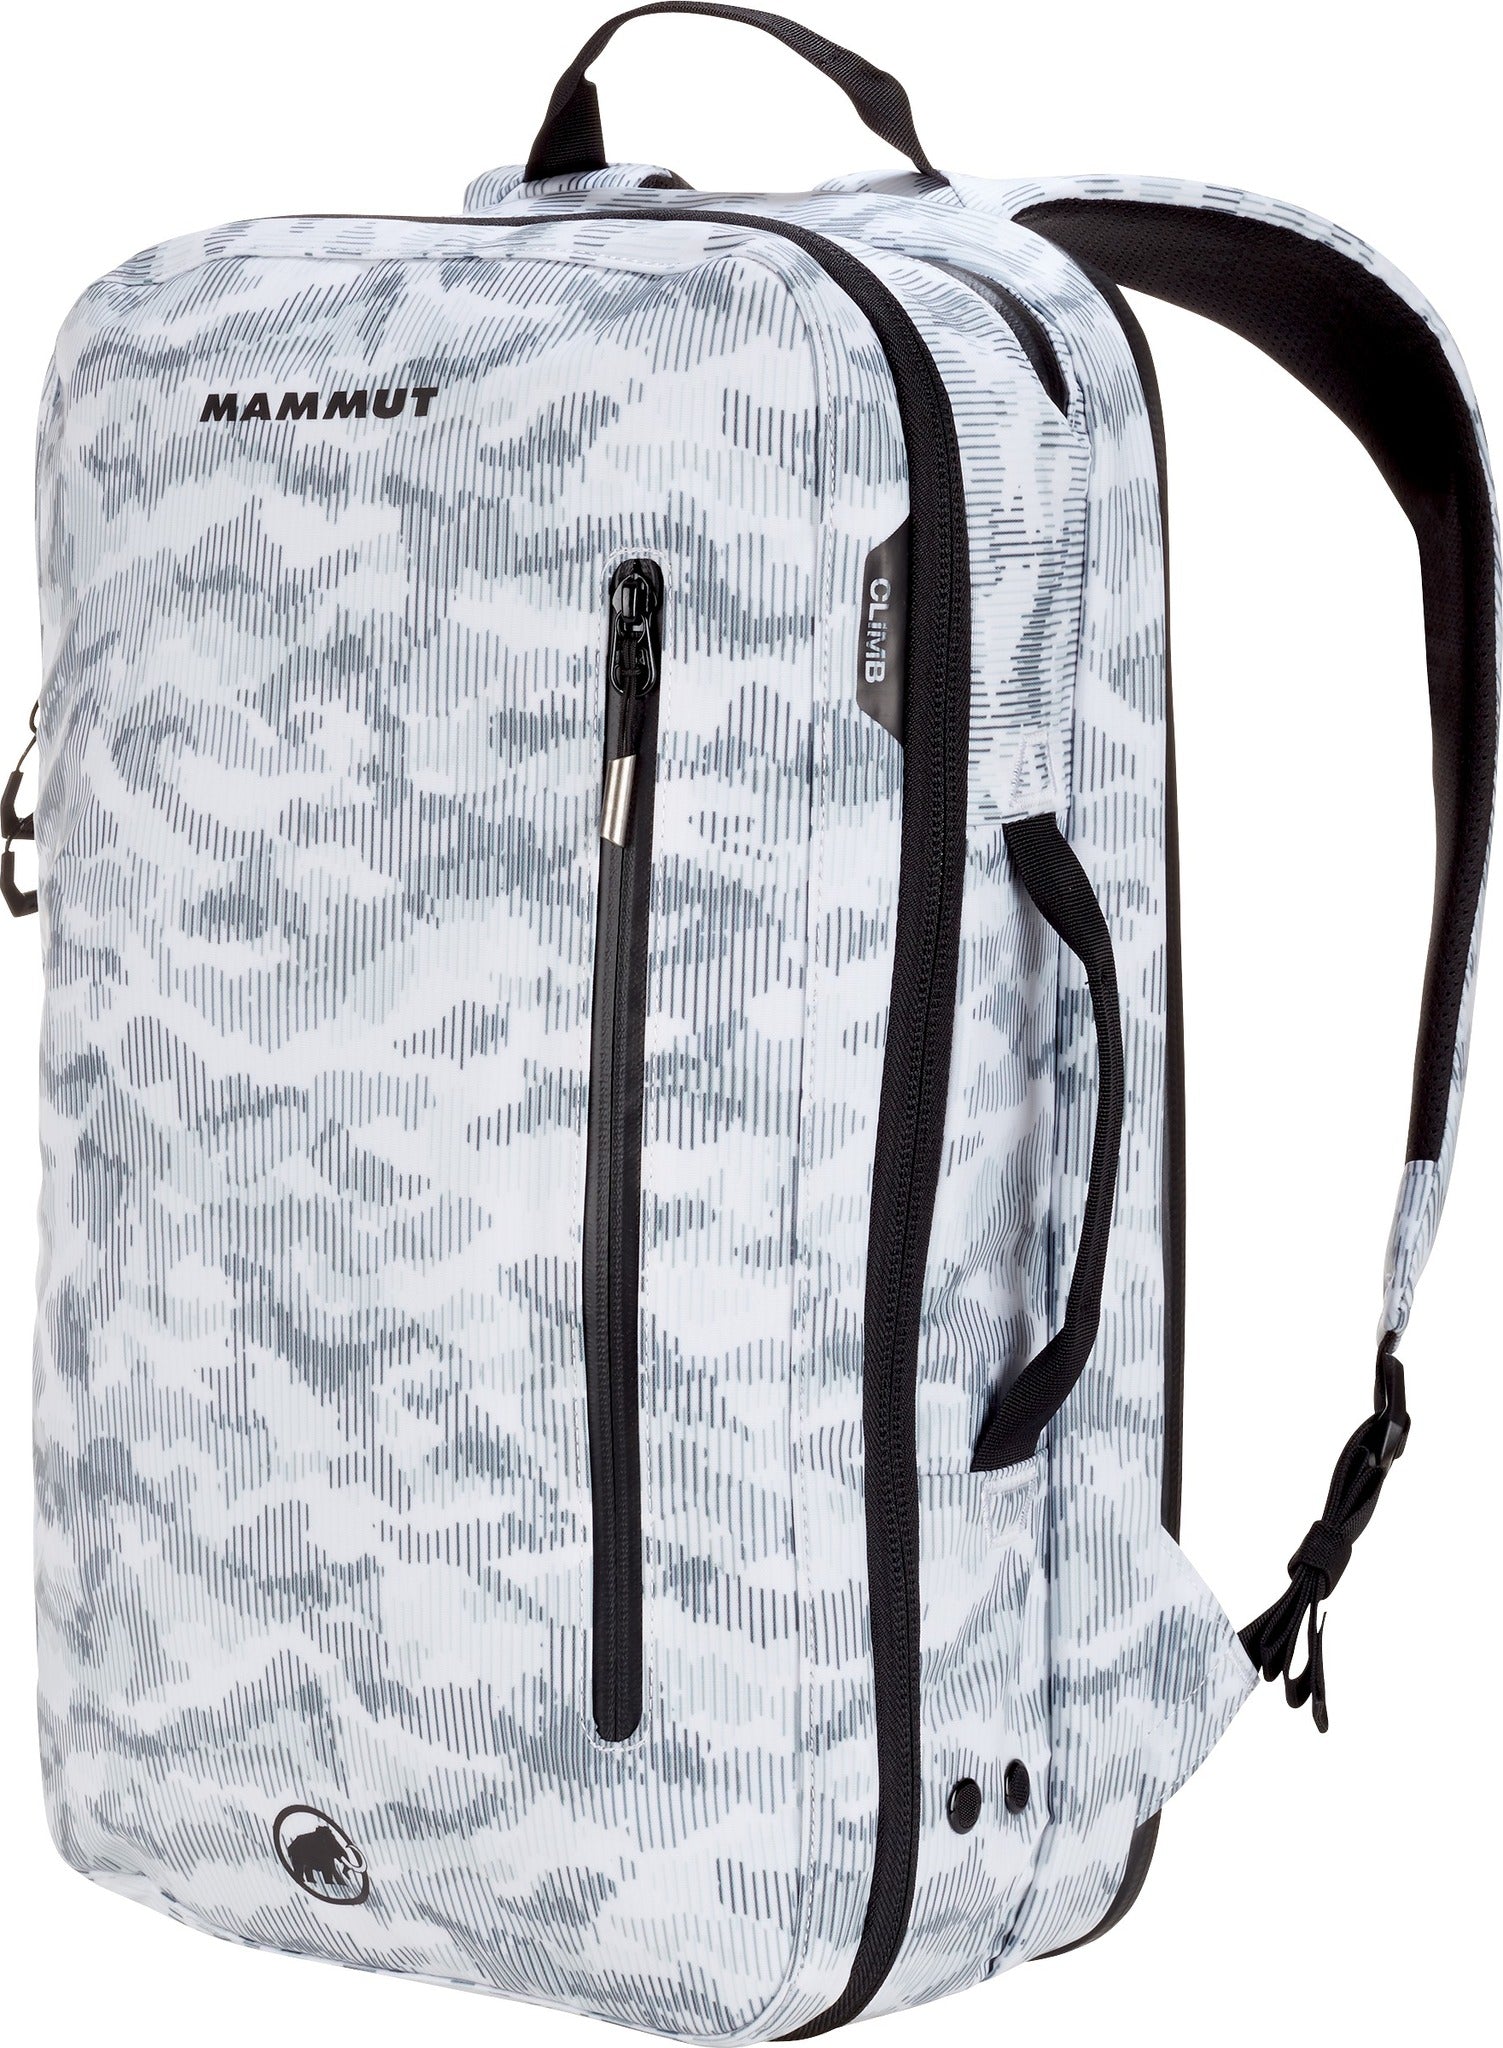 Mammut Seon Transporter X Backpack - 26L